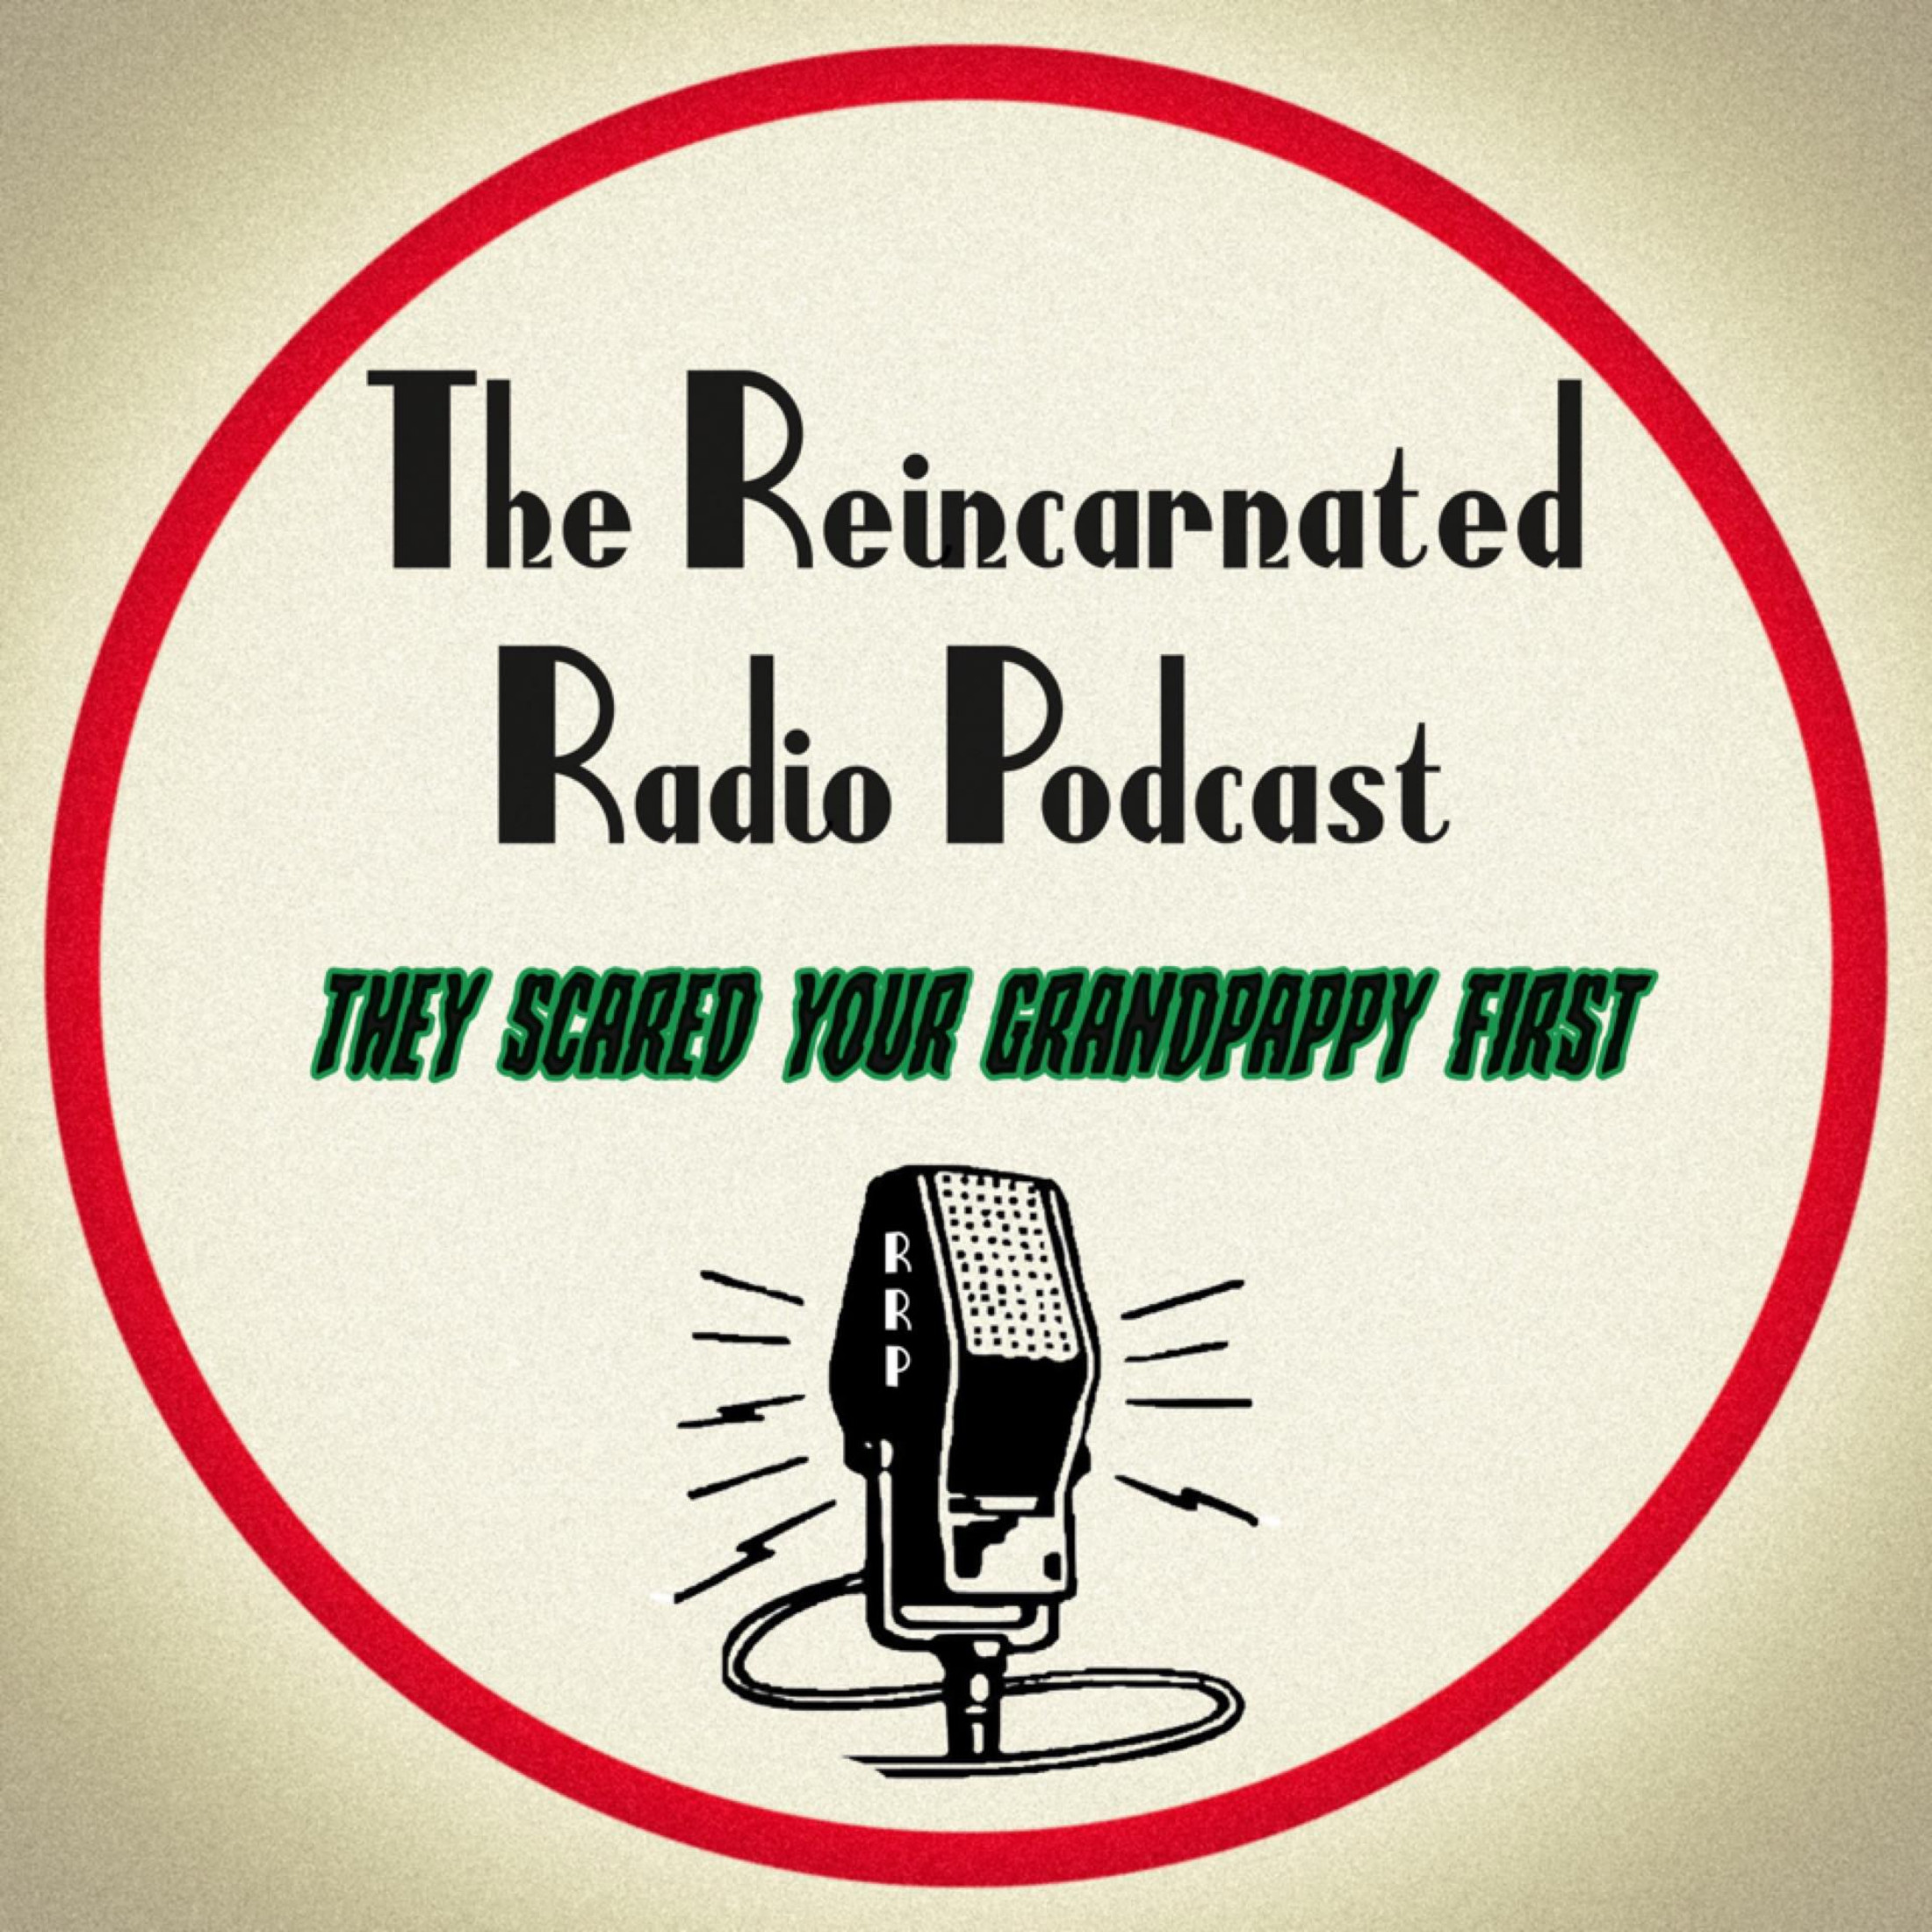 The Reincarnated Radio Podcast